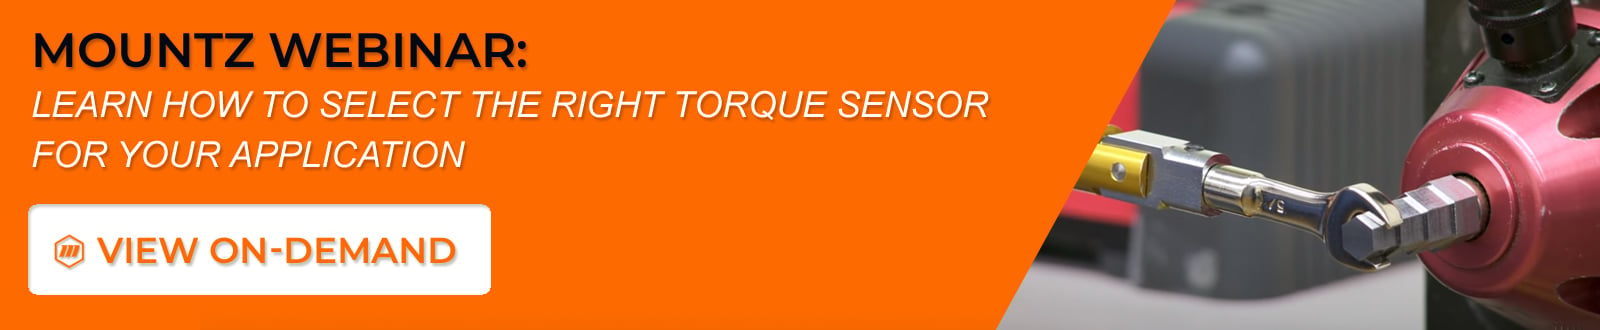 webinar-torque-sensors-banner-desktop-post-event